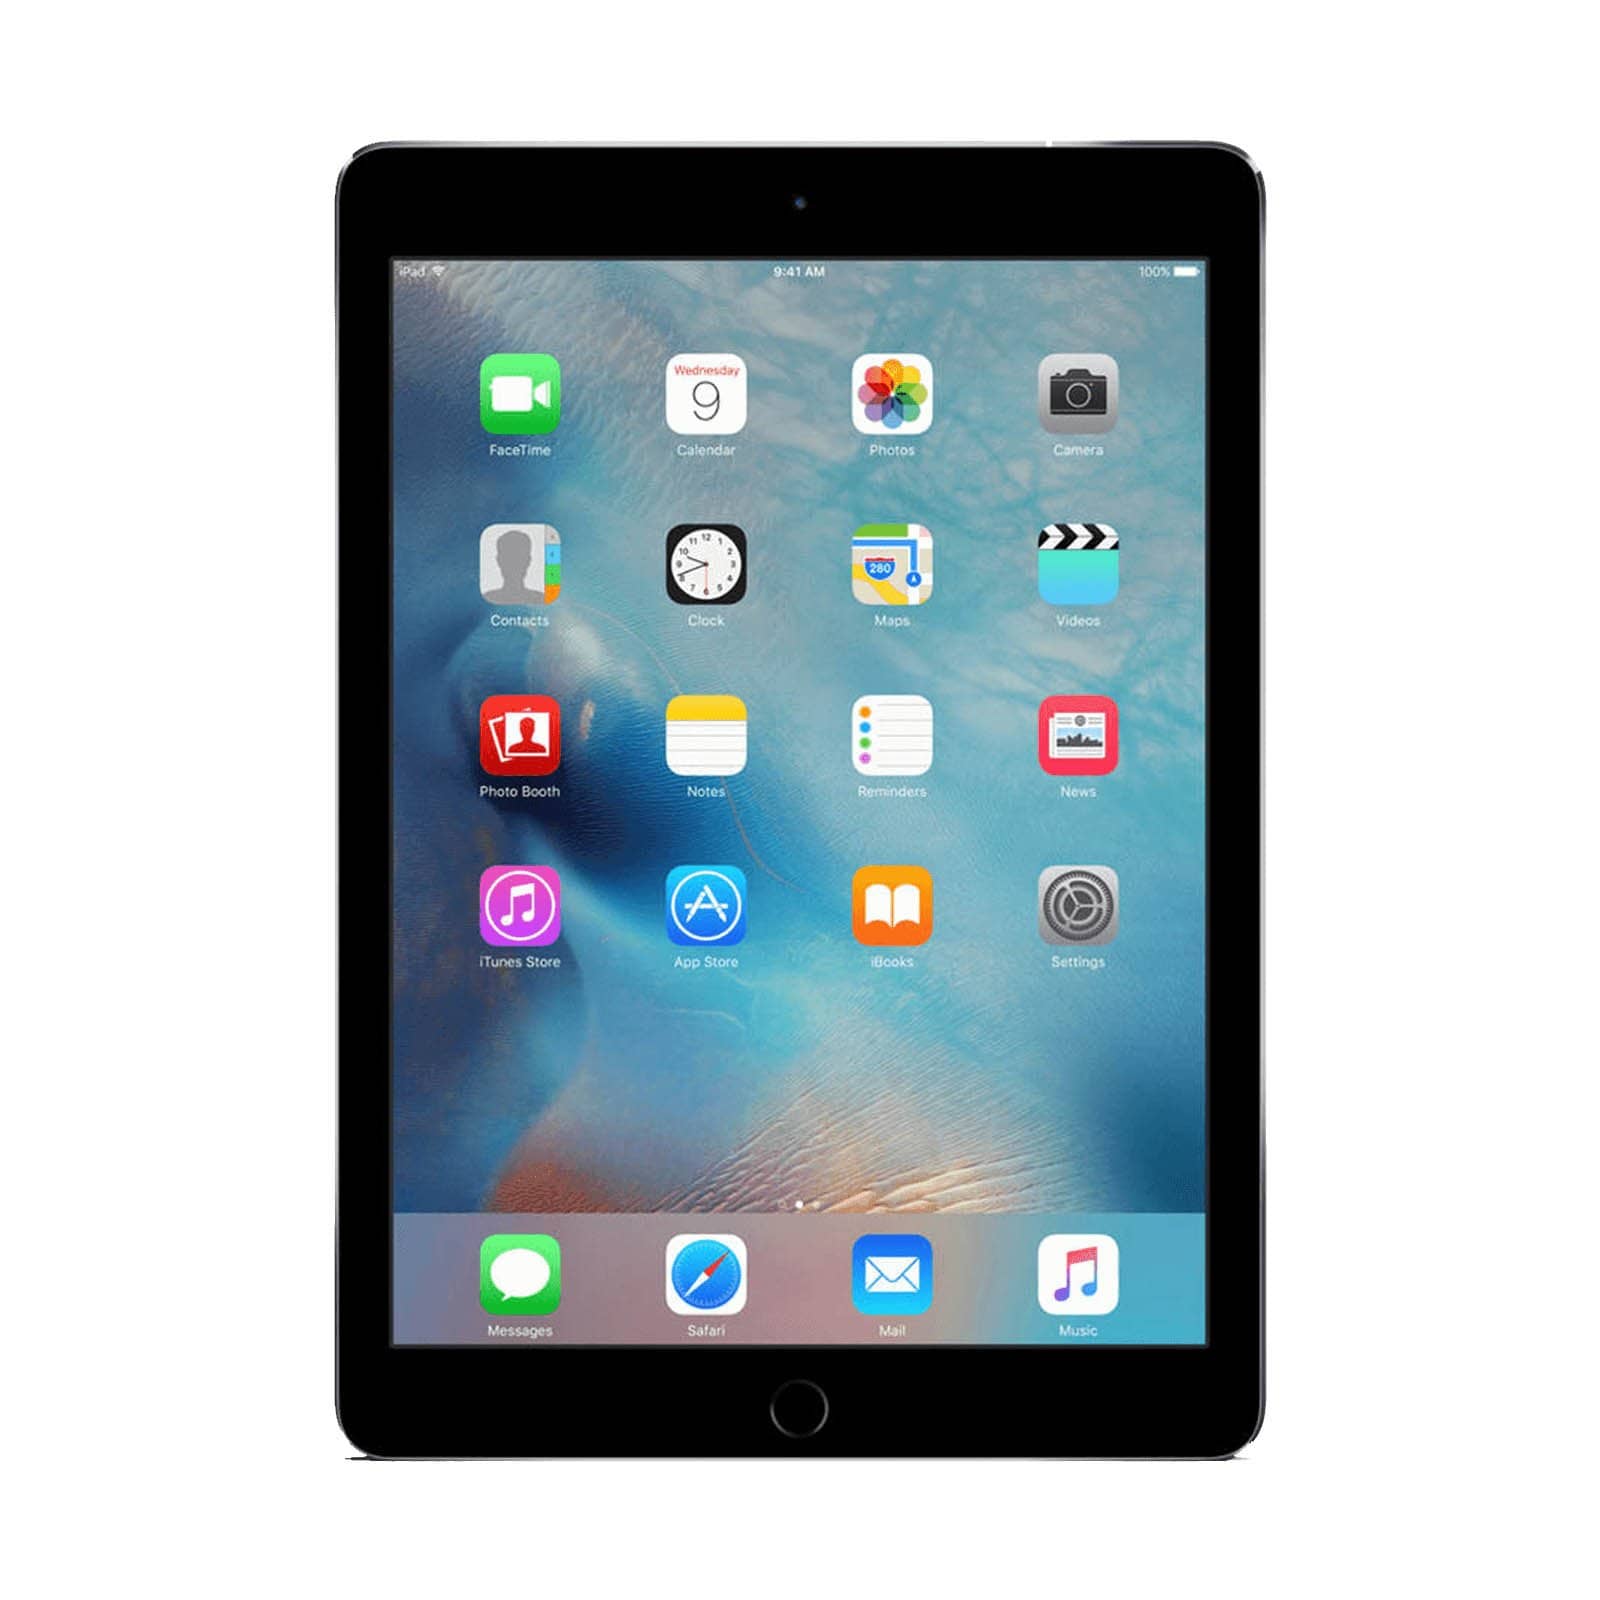 iPad Pro 9.7 Inch 32GB Space Grey Good - Unlocked